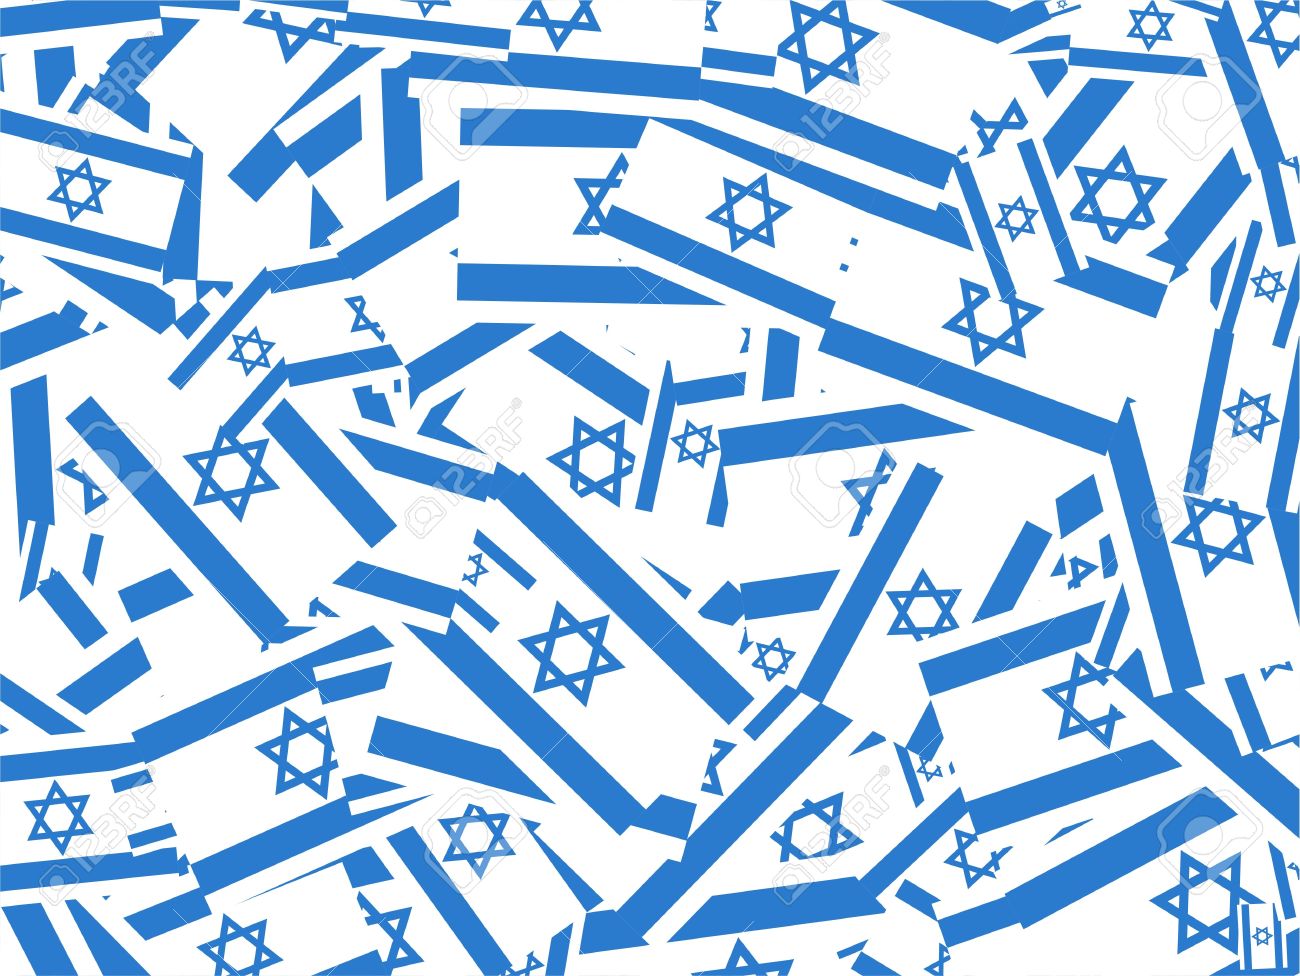 Jumbled Up Israeli Flag Wallpaper Background Design Stock Photo